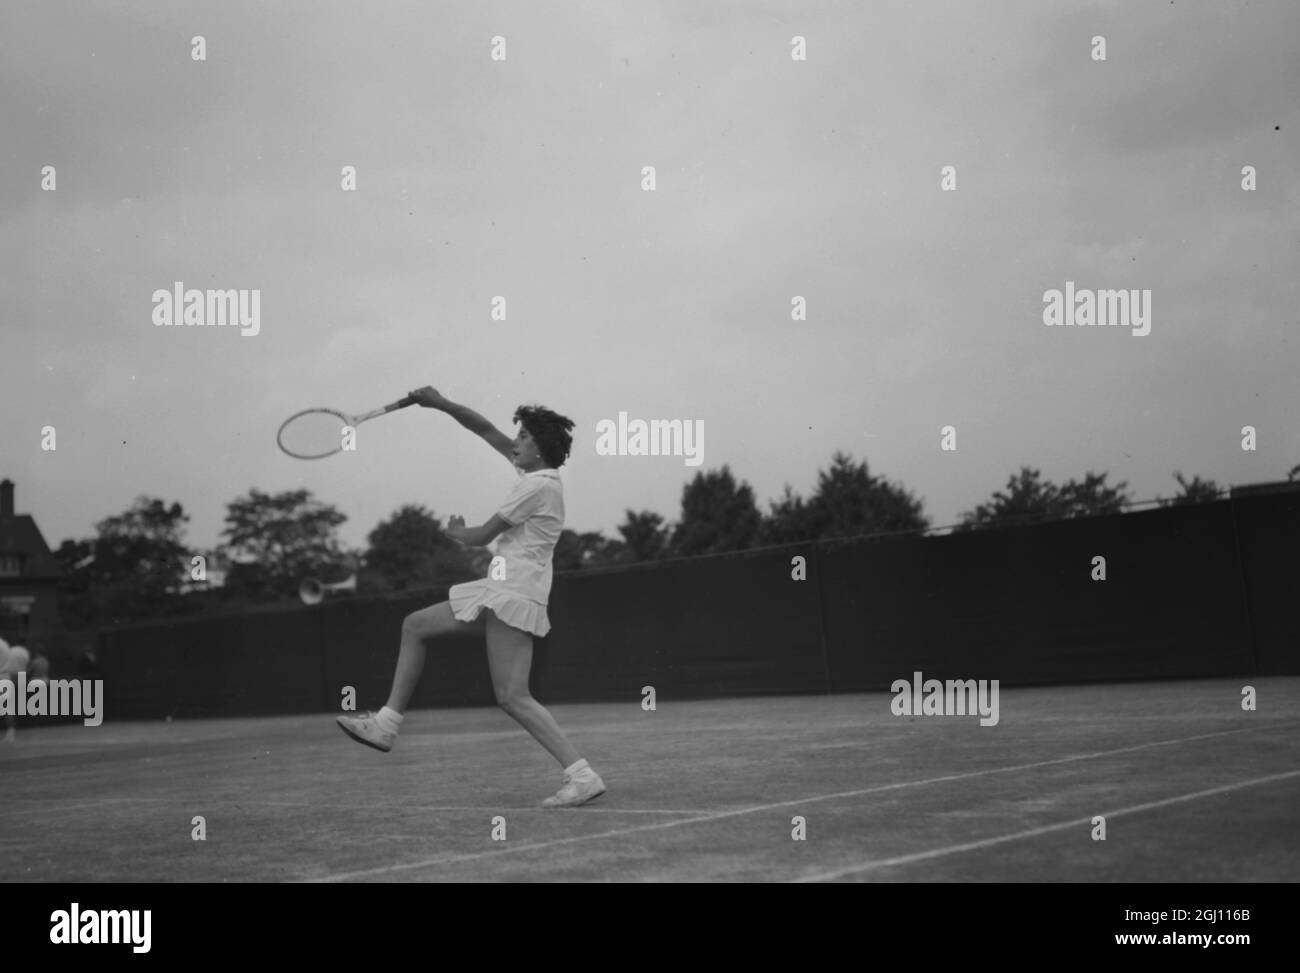 GORDIGIANI TENNIS PLAYER IN ACTION IN BECKENHAM - 14 JUNE 1961 Stock Photo